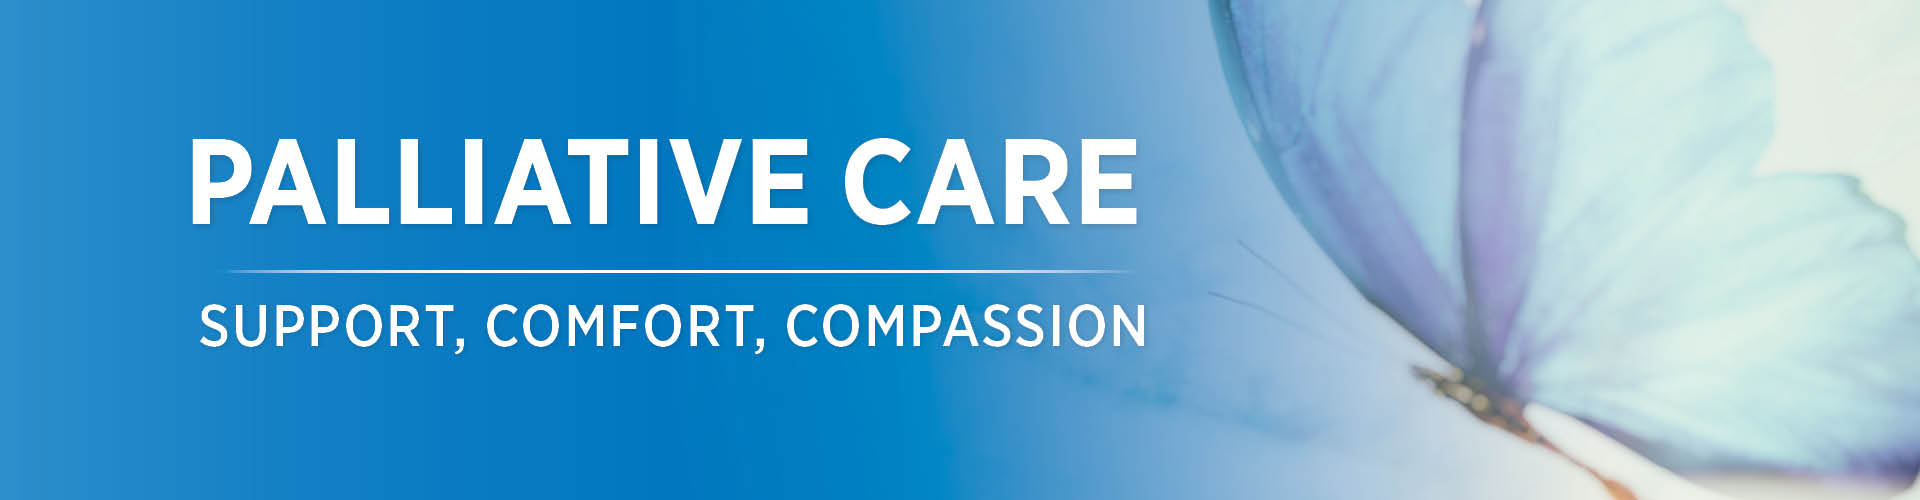 Palliative Care: Support, Comfort, Compassion